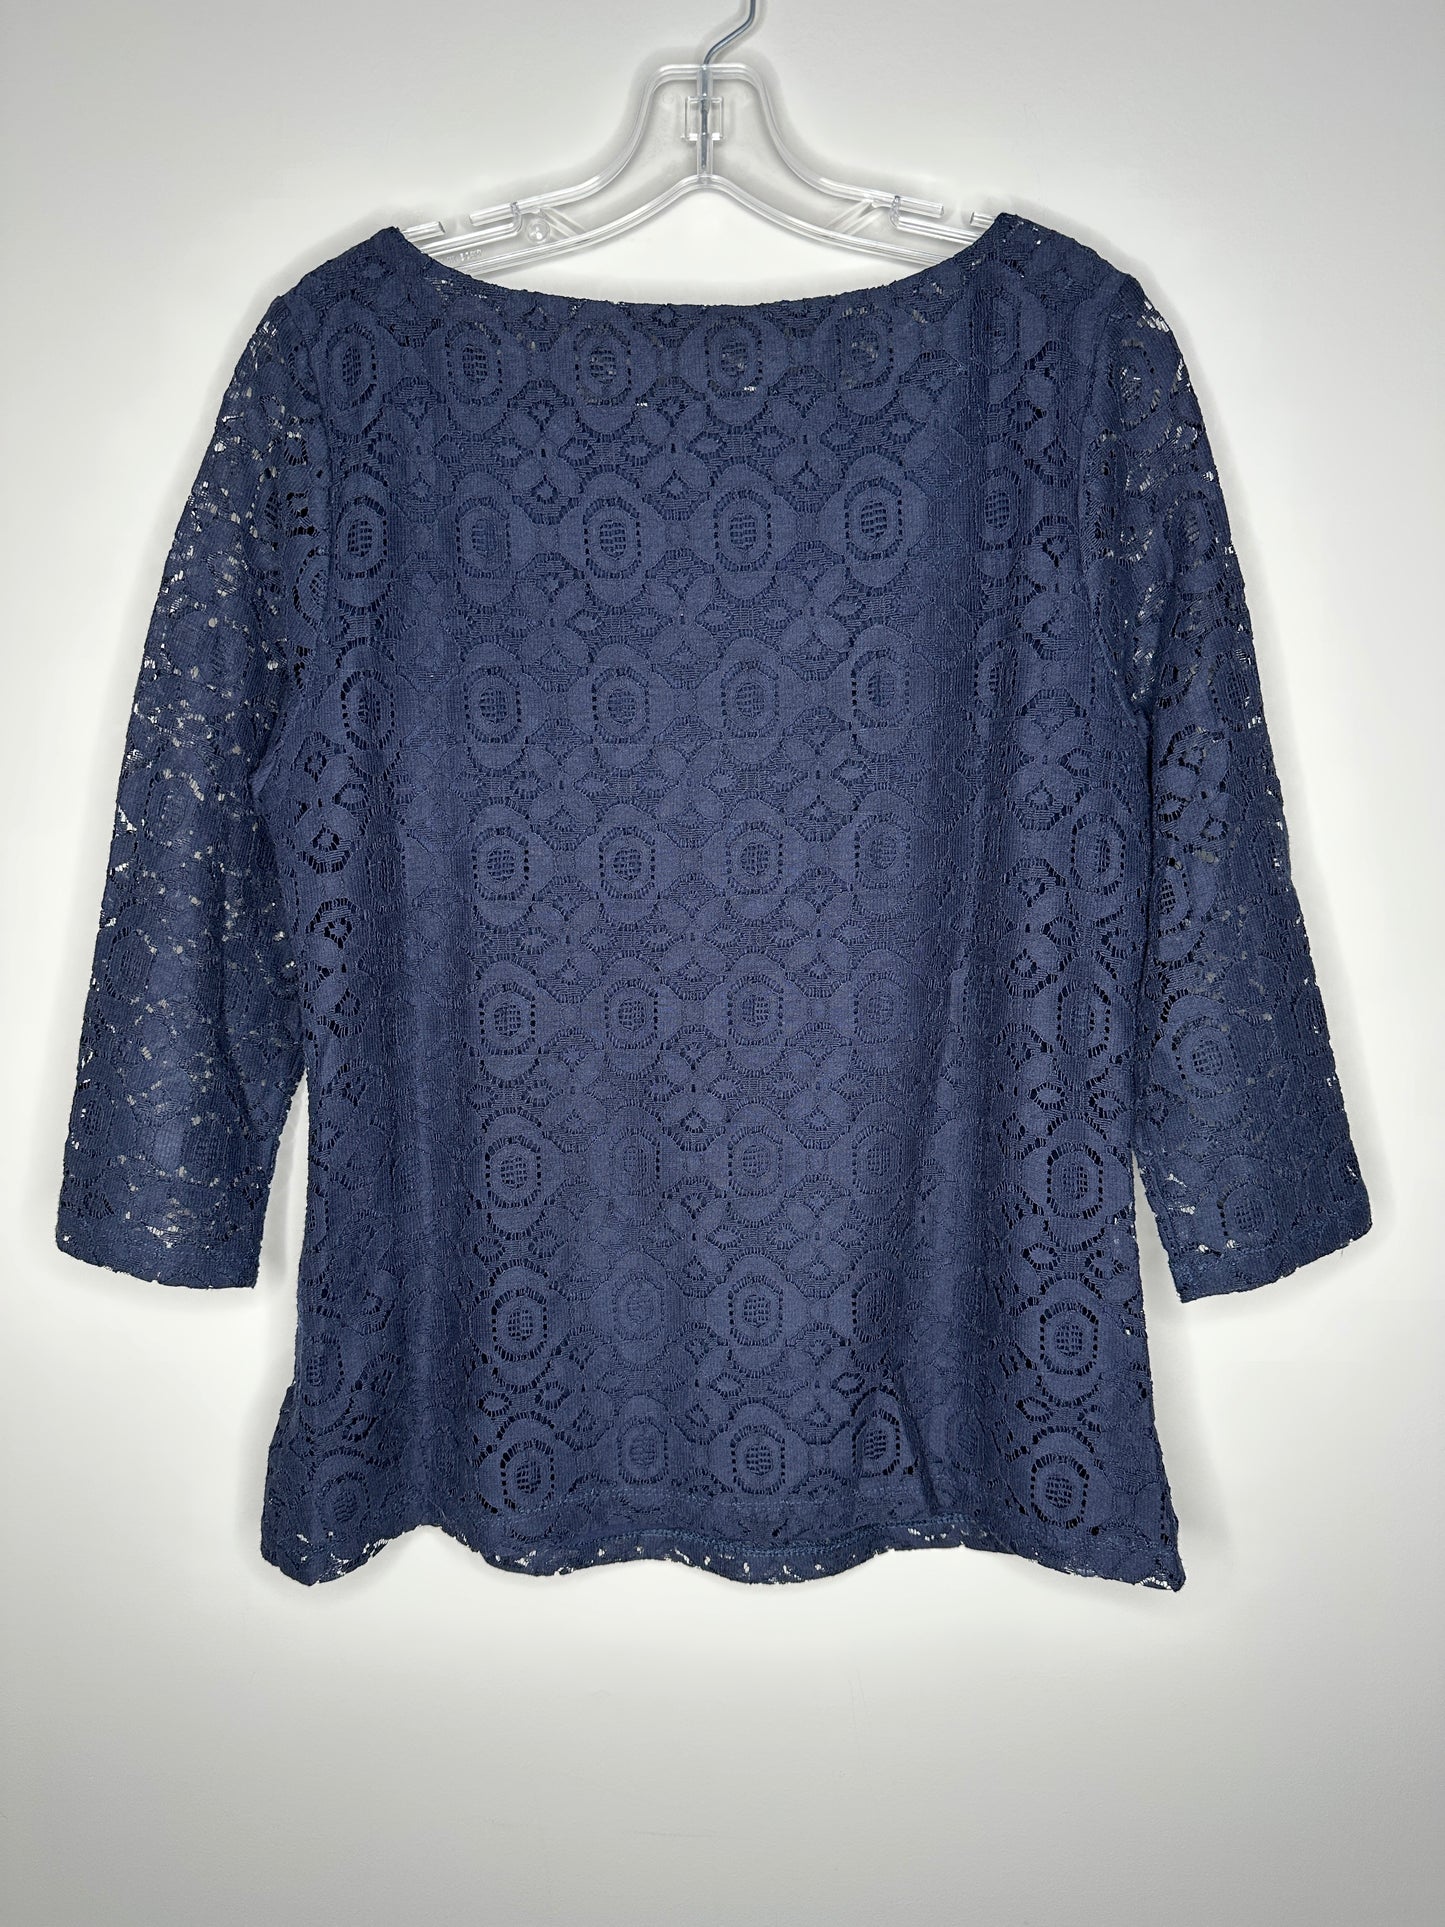 Banana Republic Size 12 Navy Blue 3/4 Sleeve Crochet Lace Top